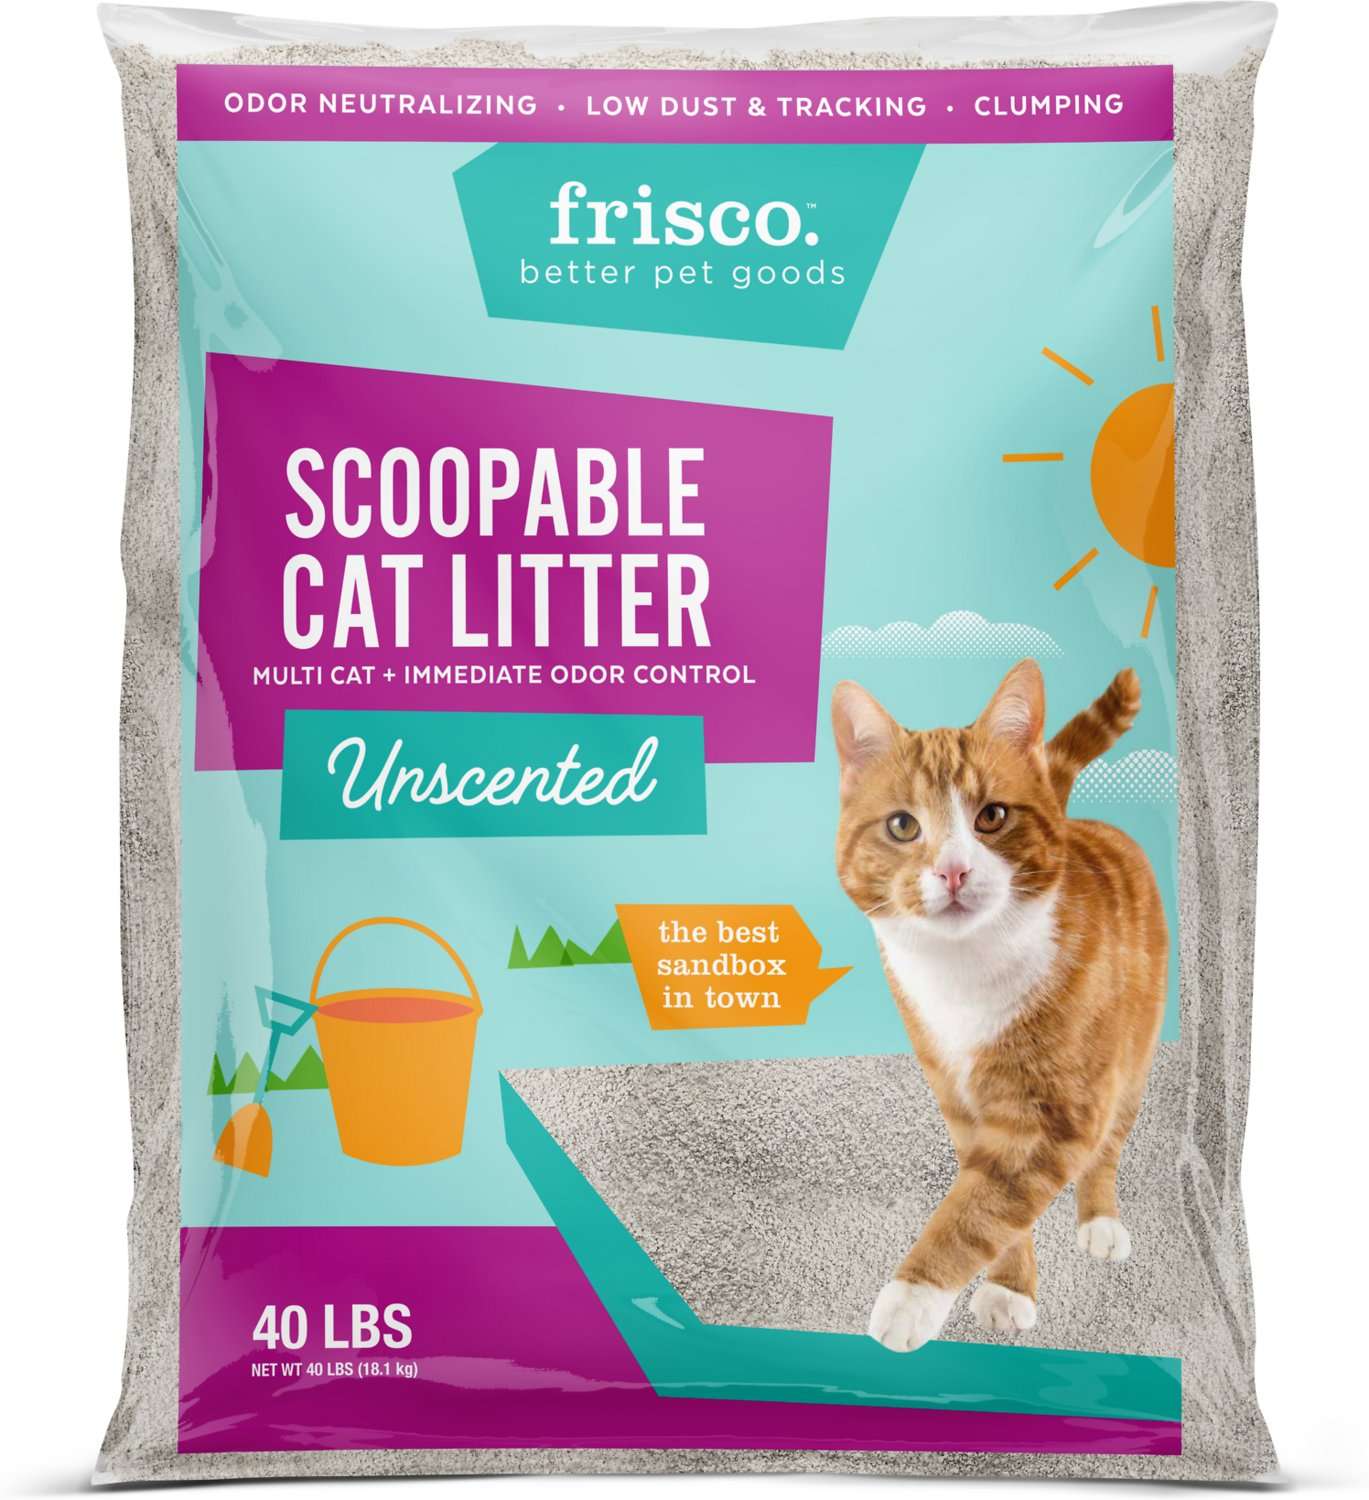 10 Best Clumping Cat Litter Consumer Reports 2020